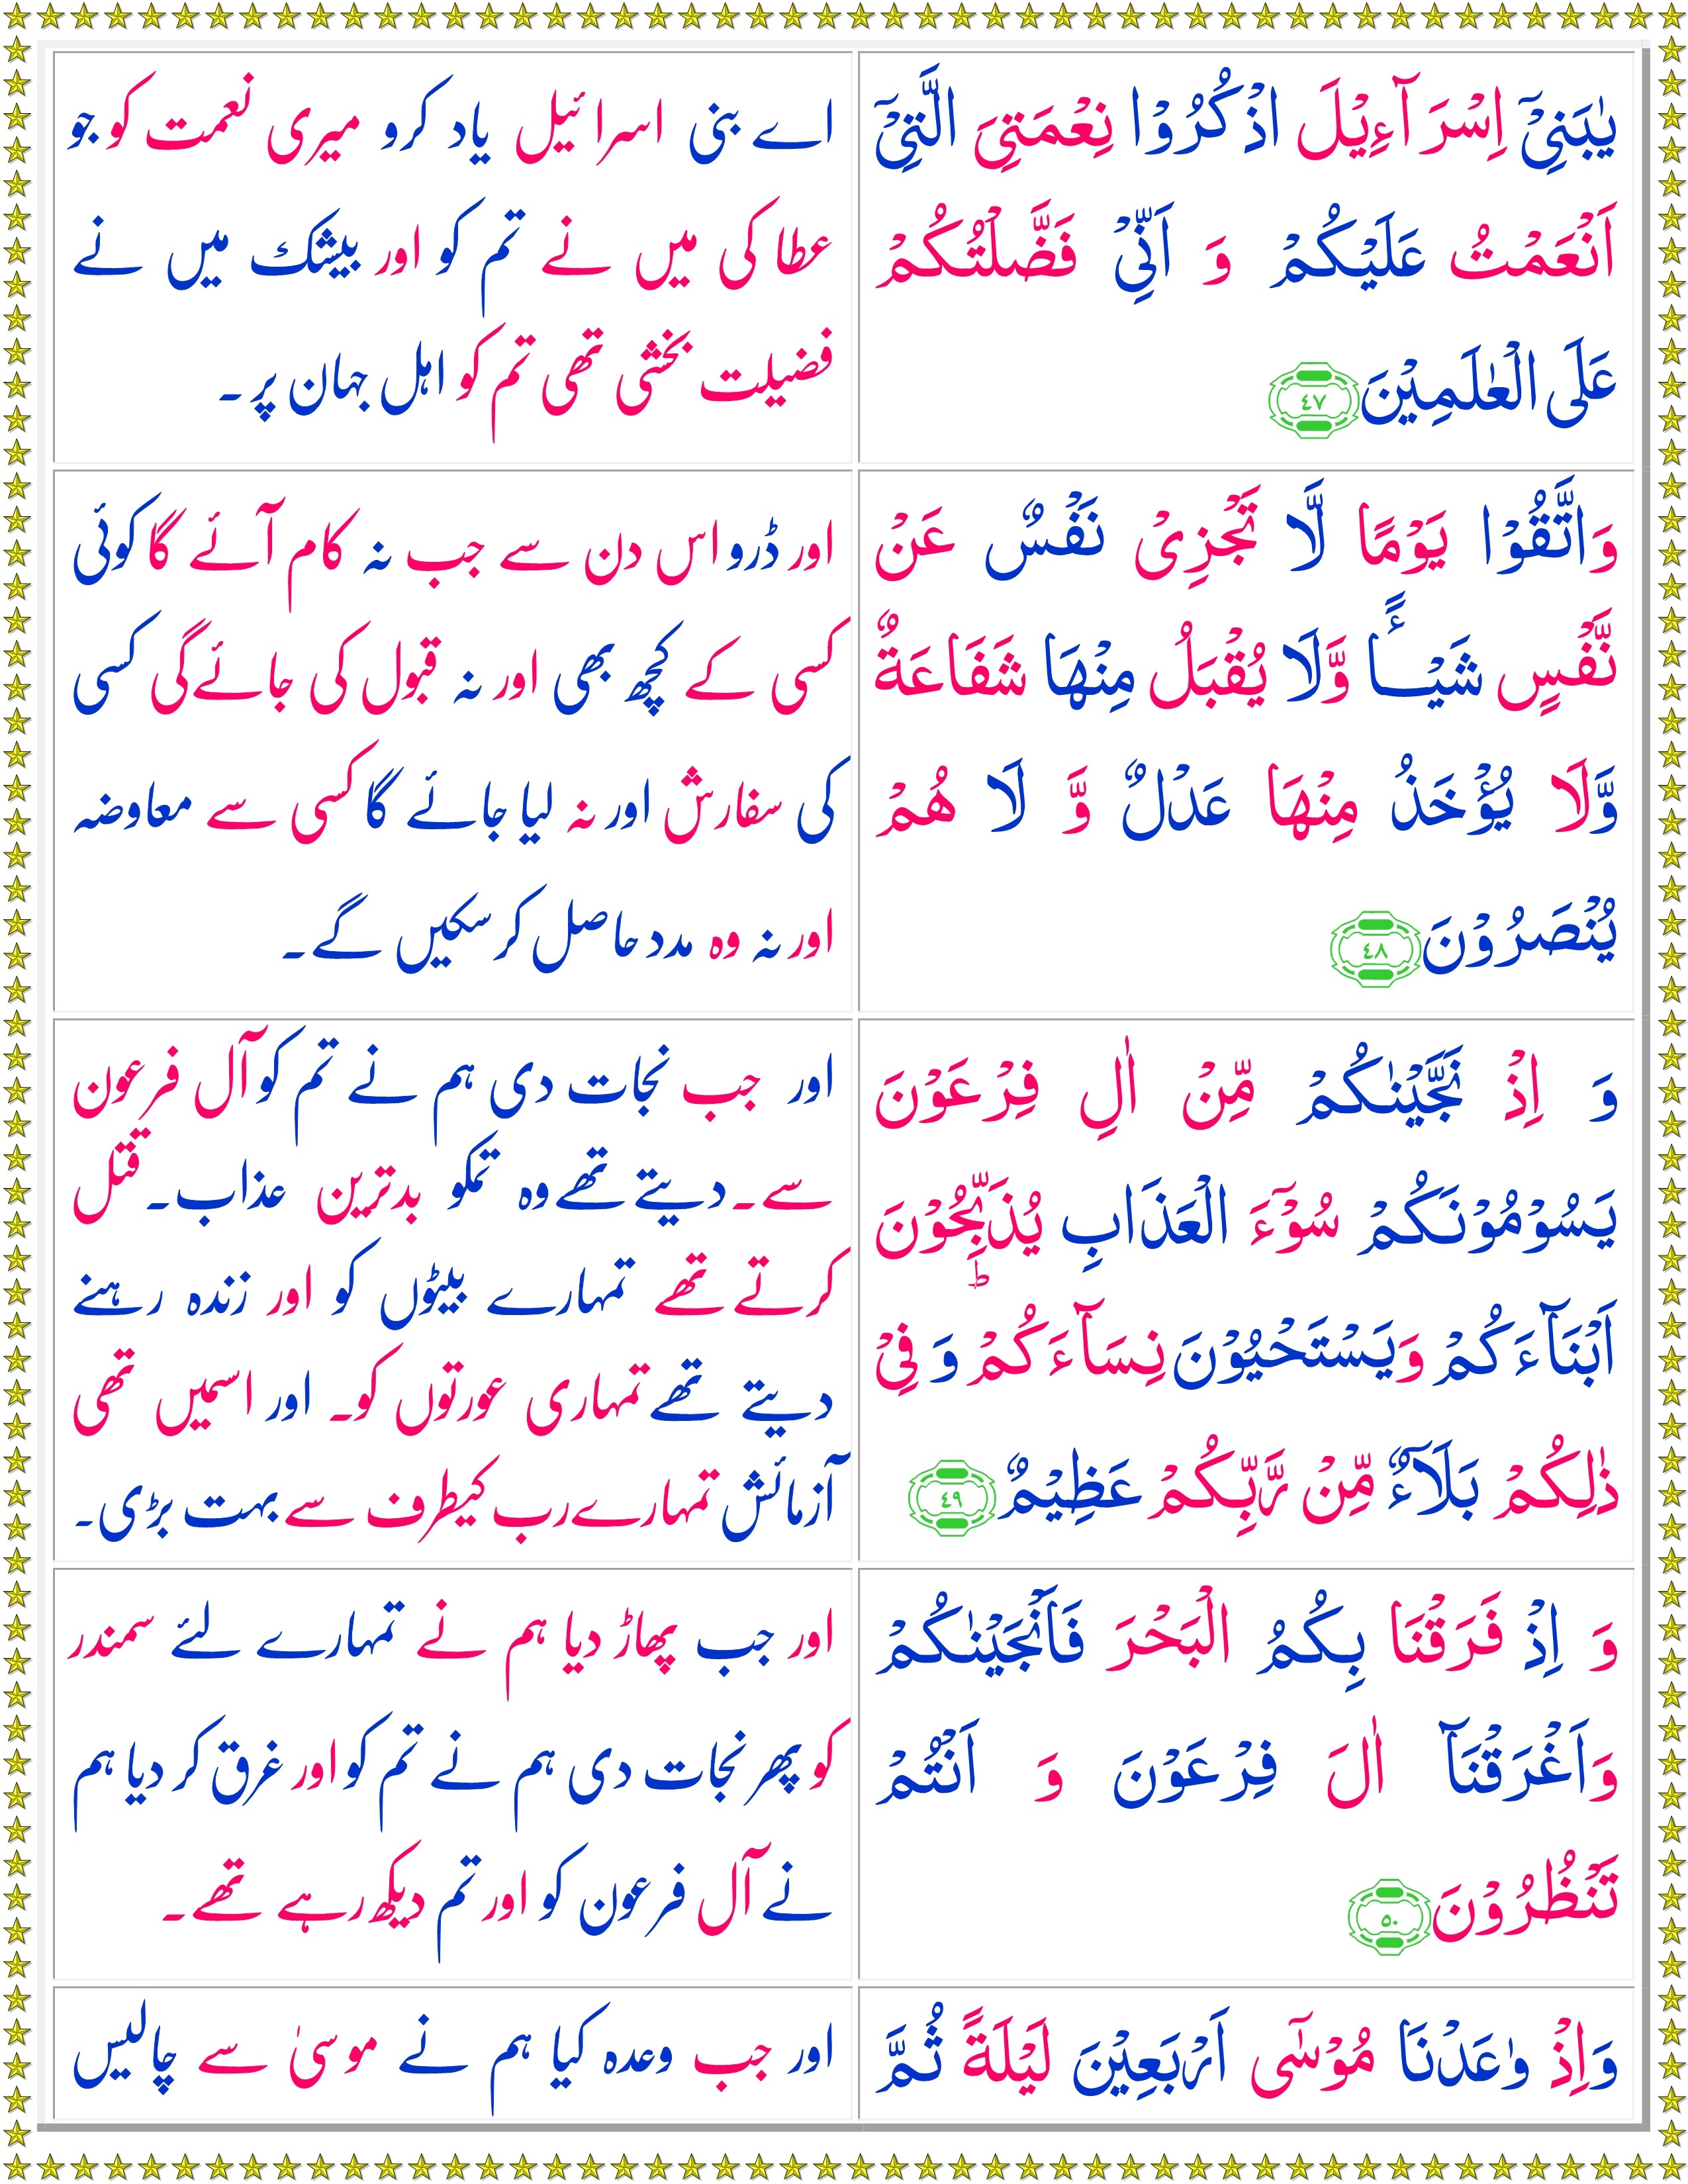 Surah Al-Baqarah (Urdu) - Page 2 of 10 - Quran o Sunnat